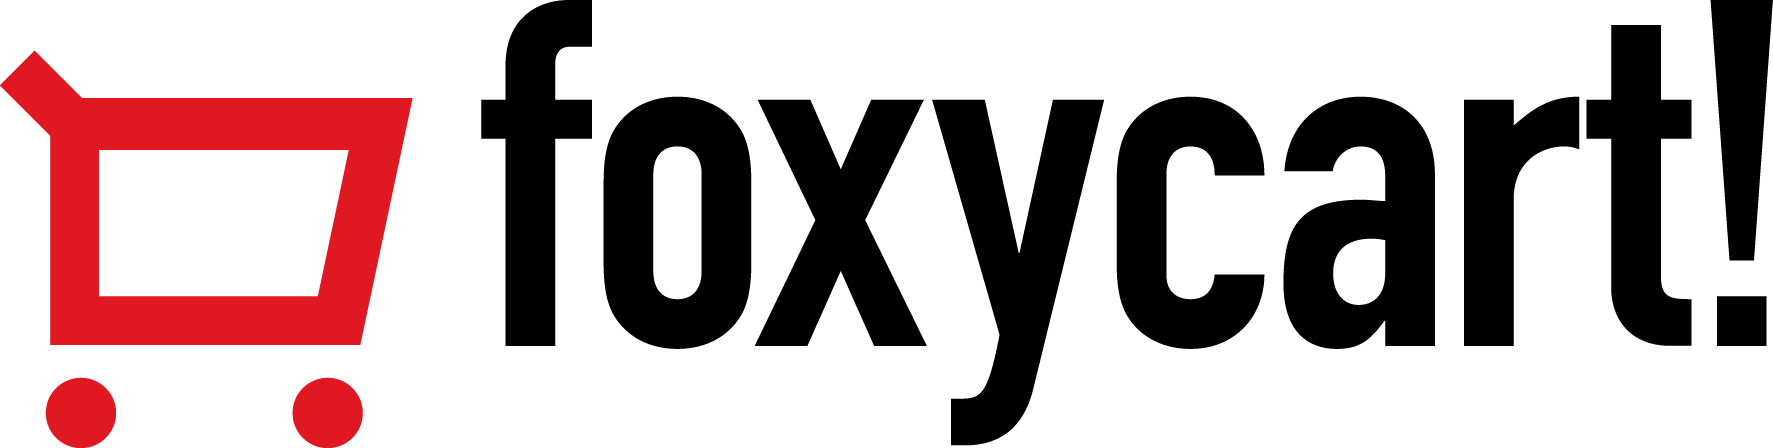 foxycart-logo-8in